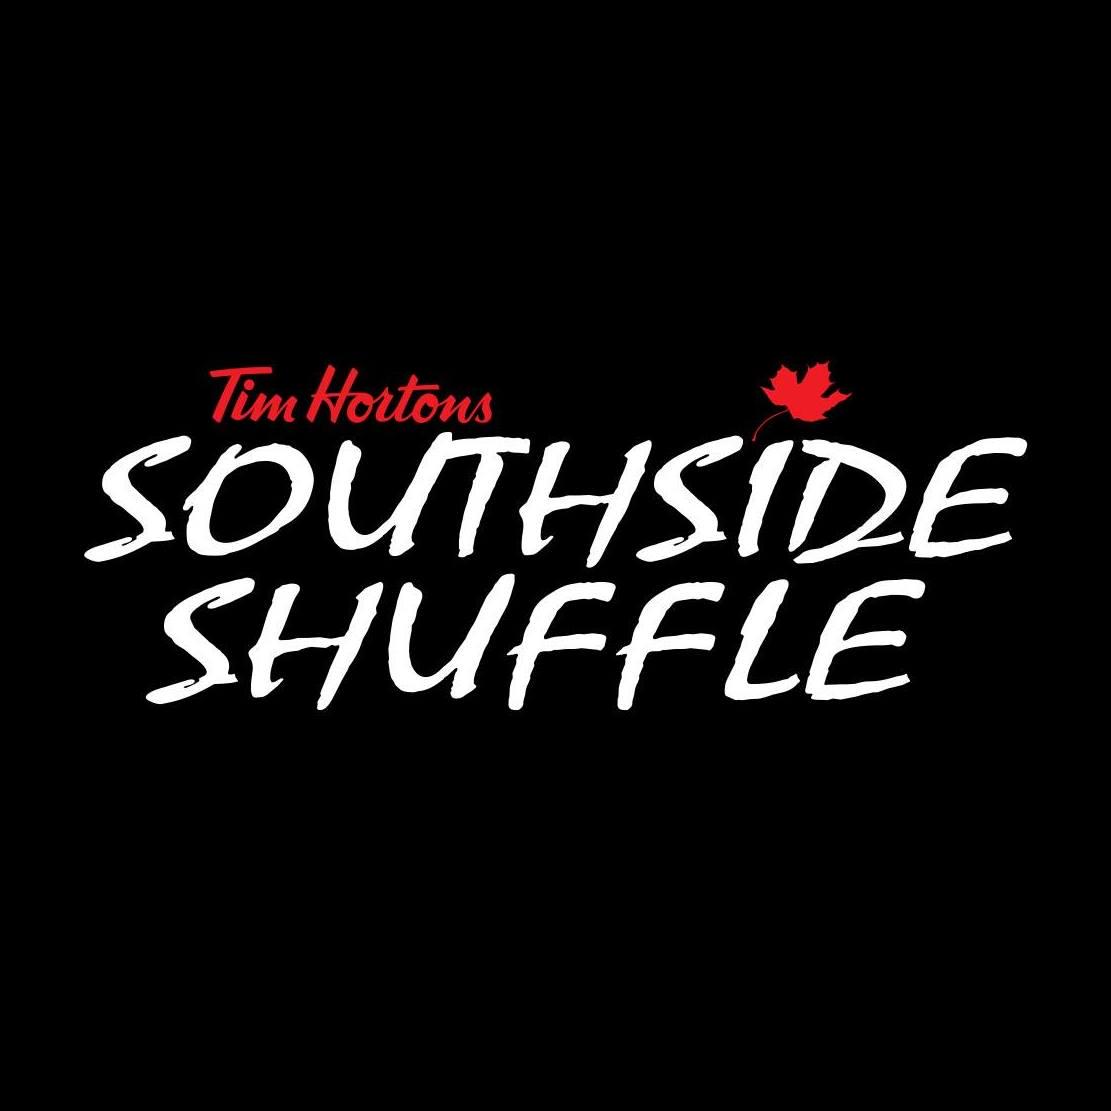 Southside Shuffle